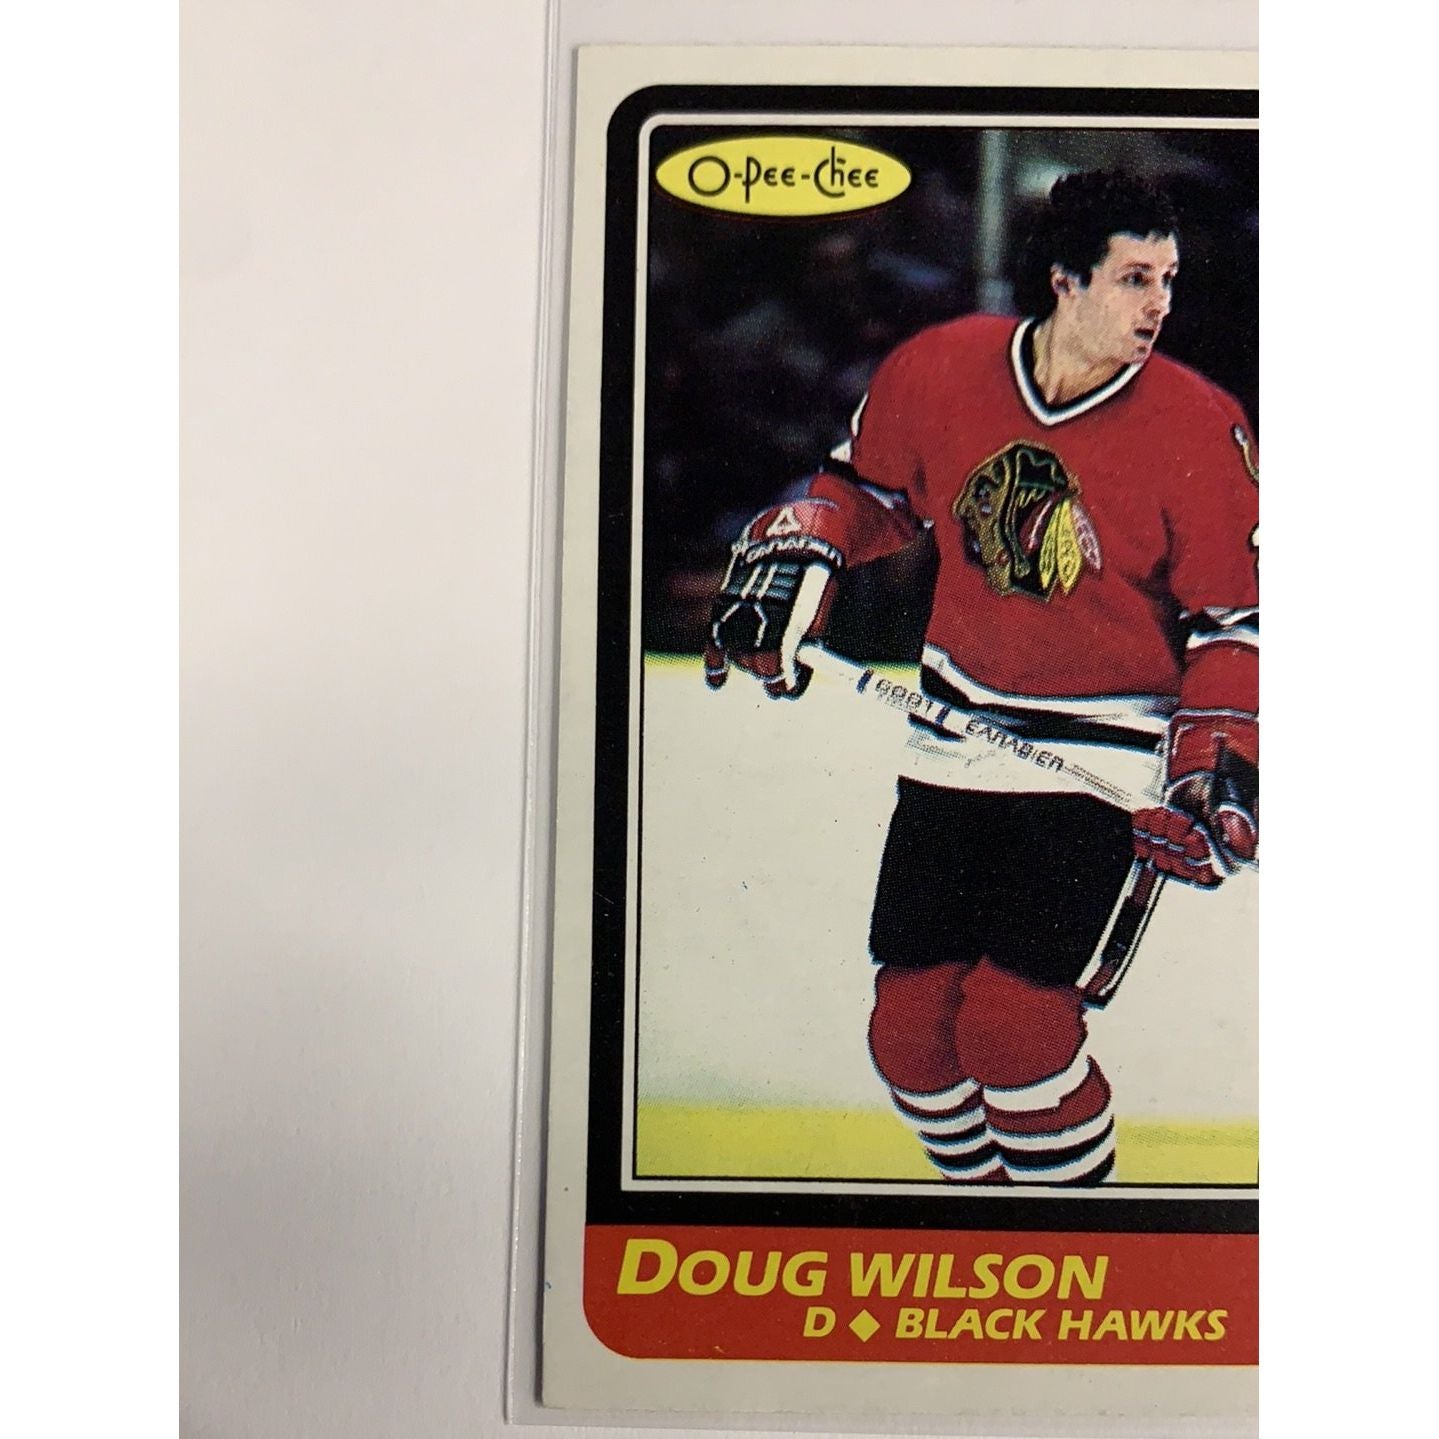  1986-87 O-Pee-Chee Doug Wilson Base #106  Local Legends Cards & Collectibles